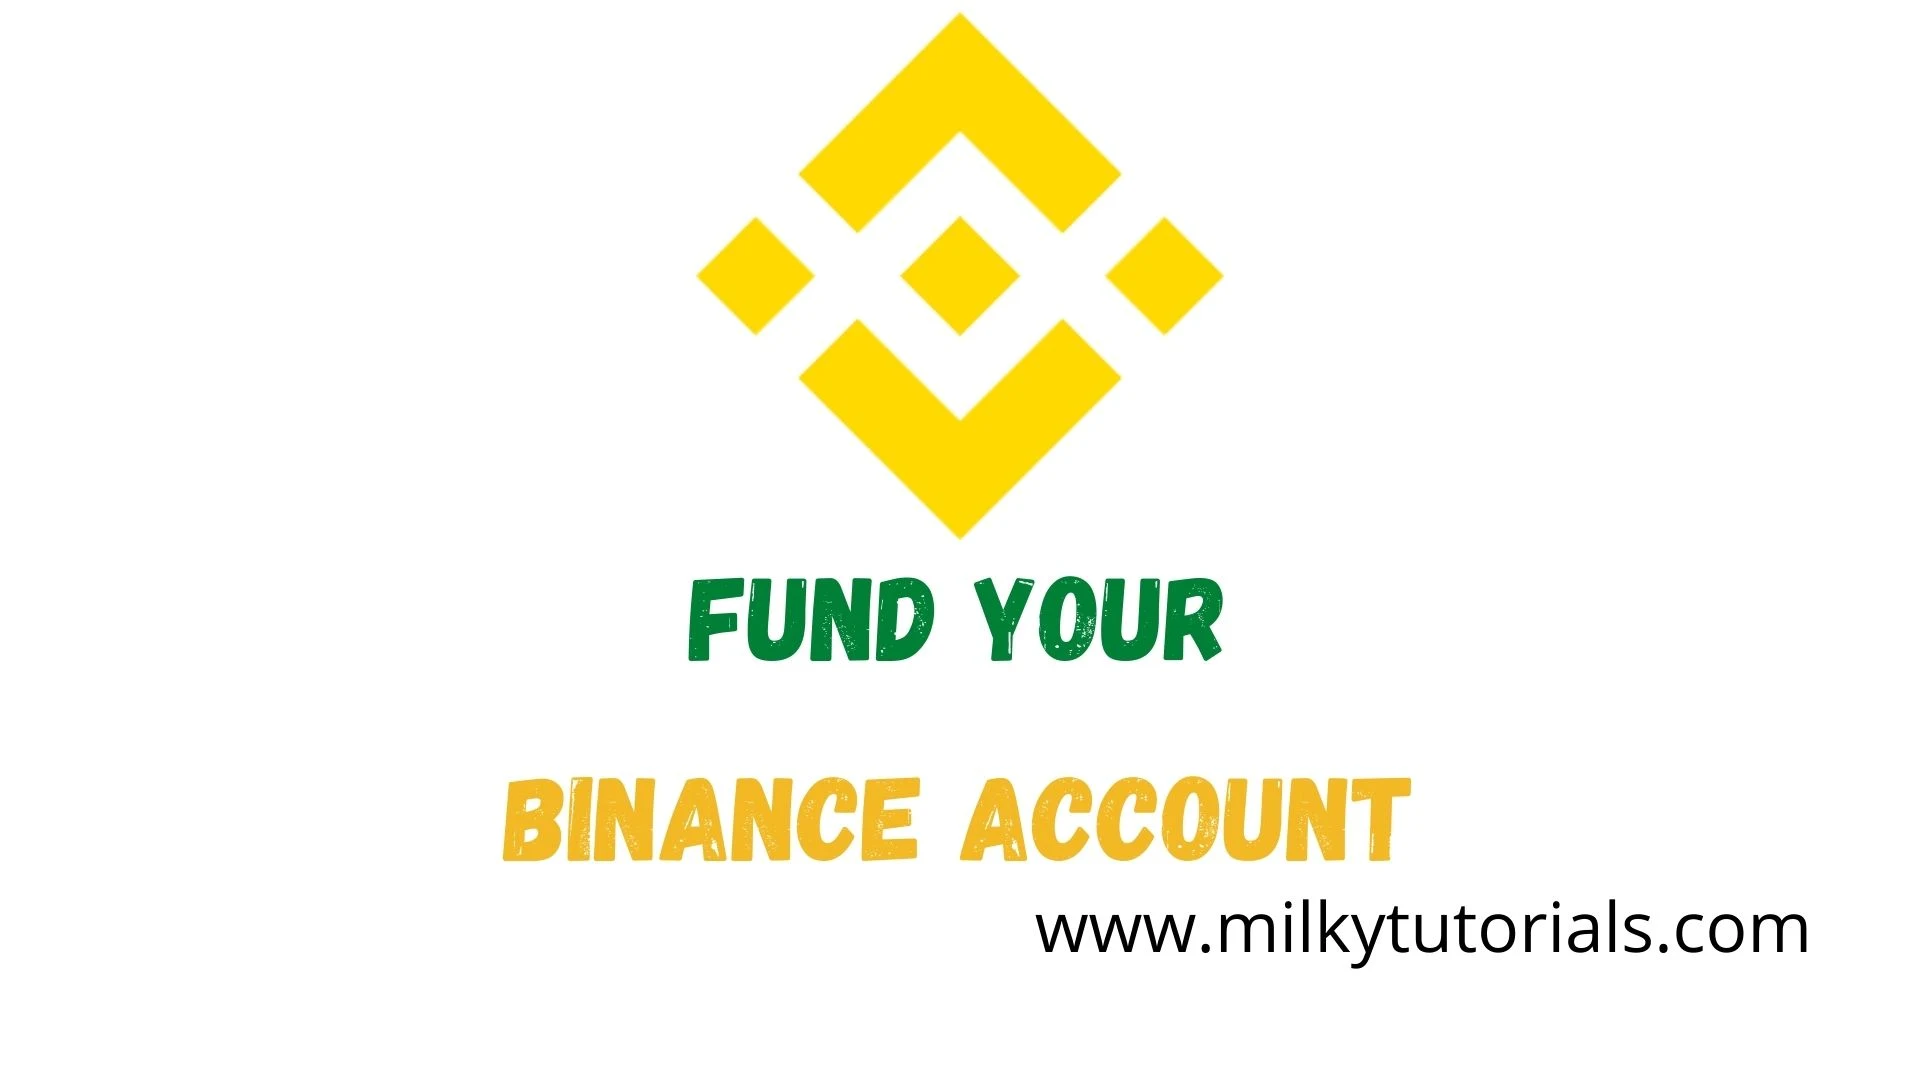 Fund your binance account